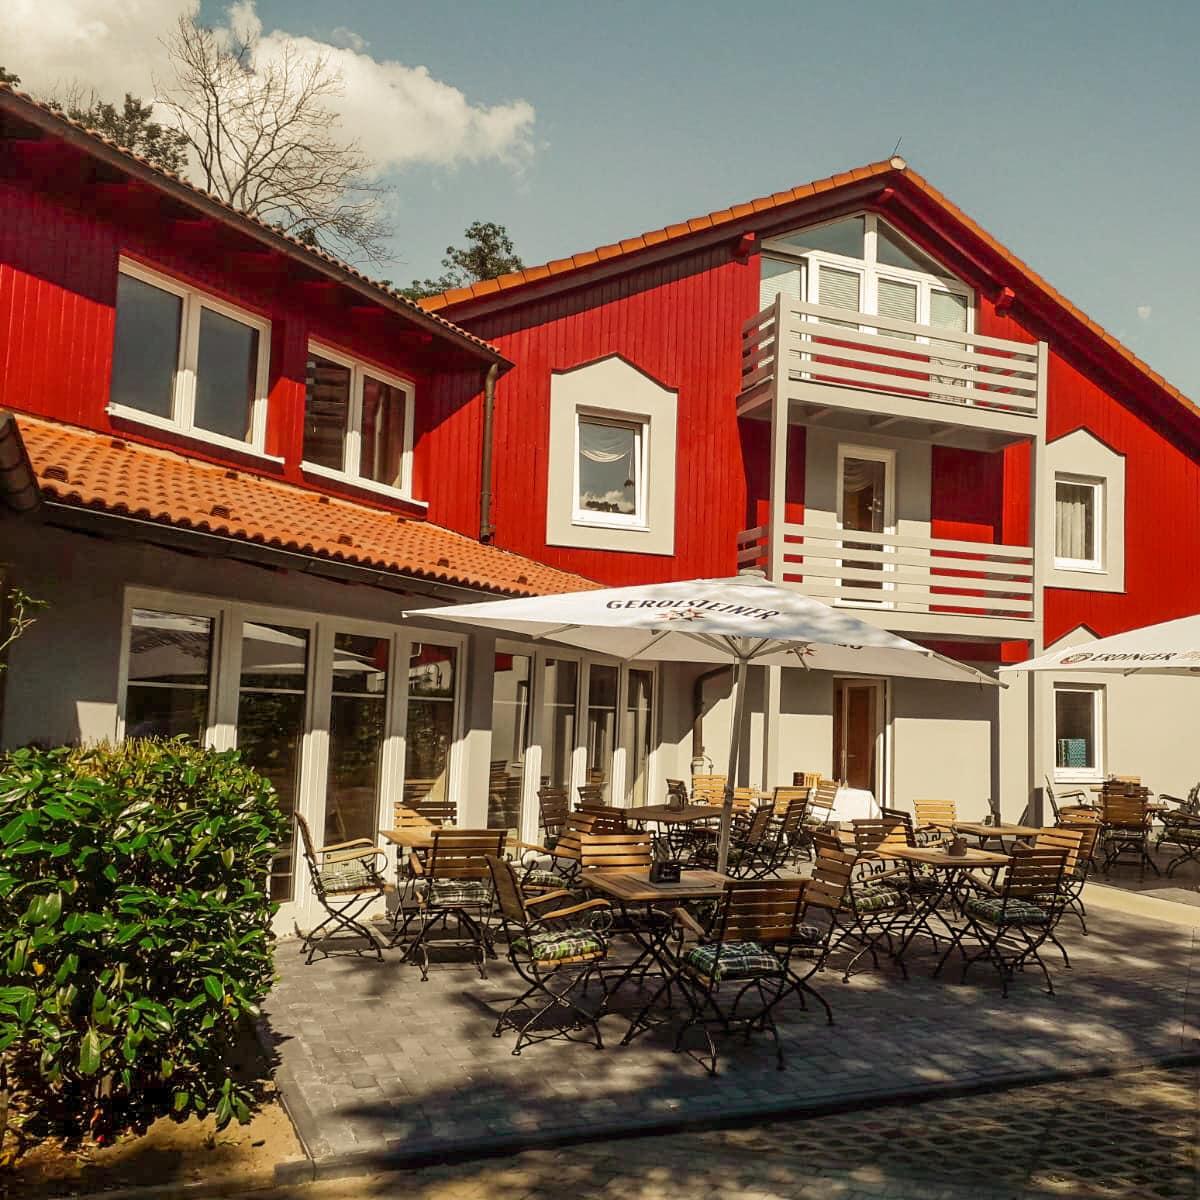 Restaurant "Hotel Rosengarten" in Naunhof